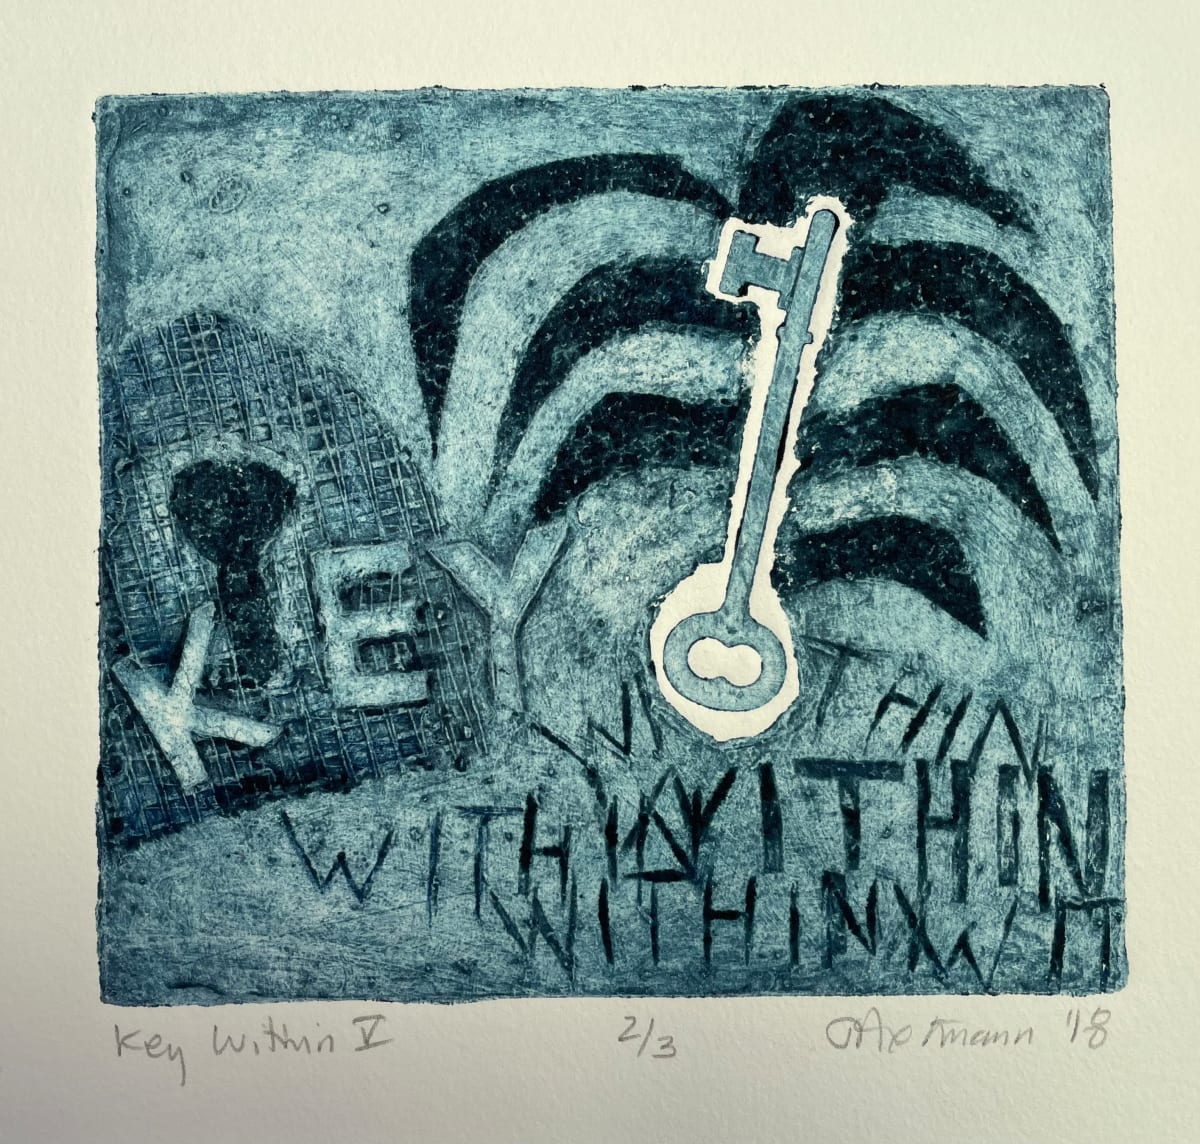 Key Within V, 2/3 by Joanna Axtmann 